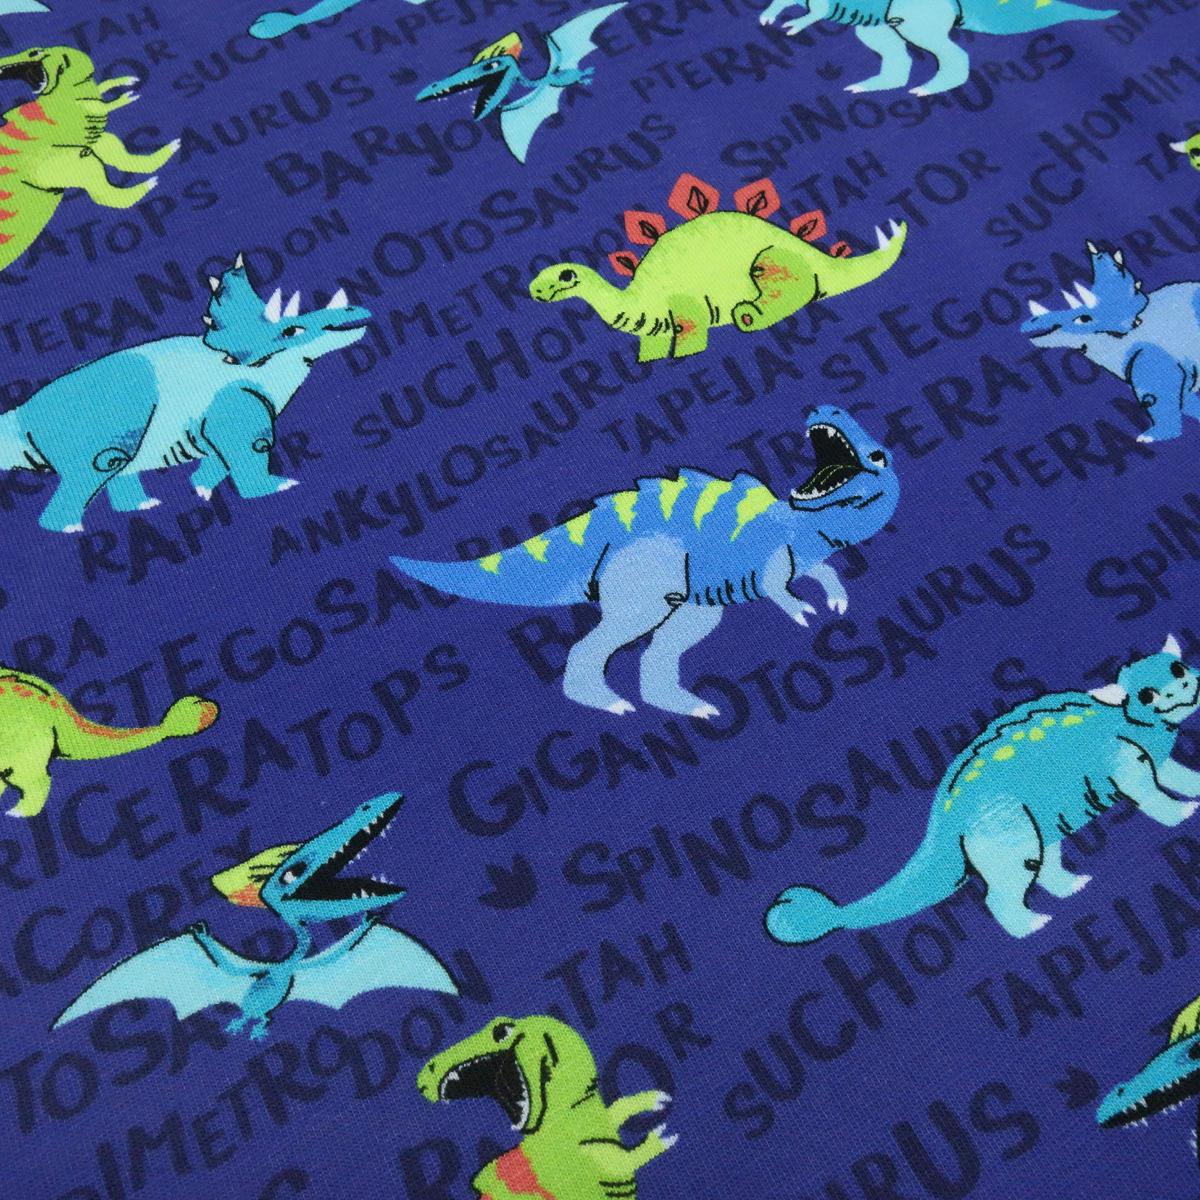 Stoff Baumwolle Jersey Dinos Dinosaurier royal blau türkis grün bunt Kinderstoff Kleiderstoff Meterware